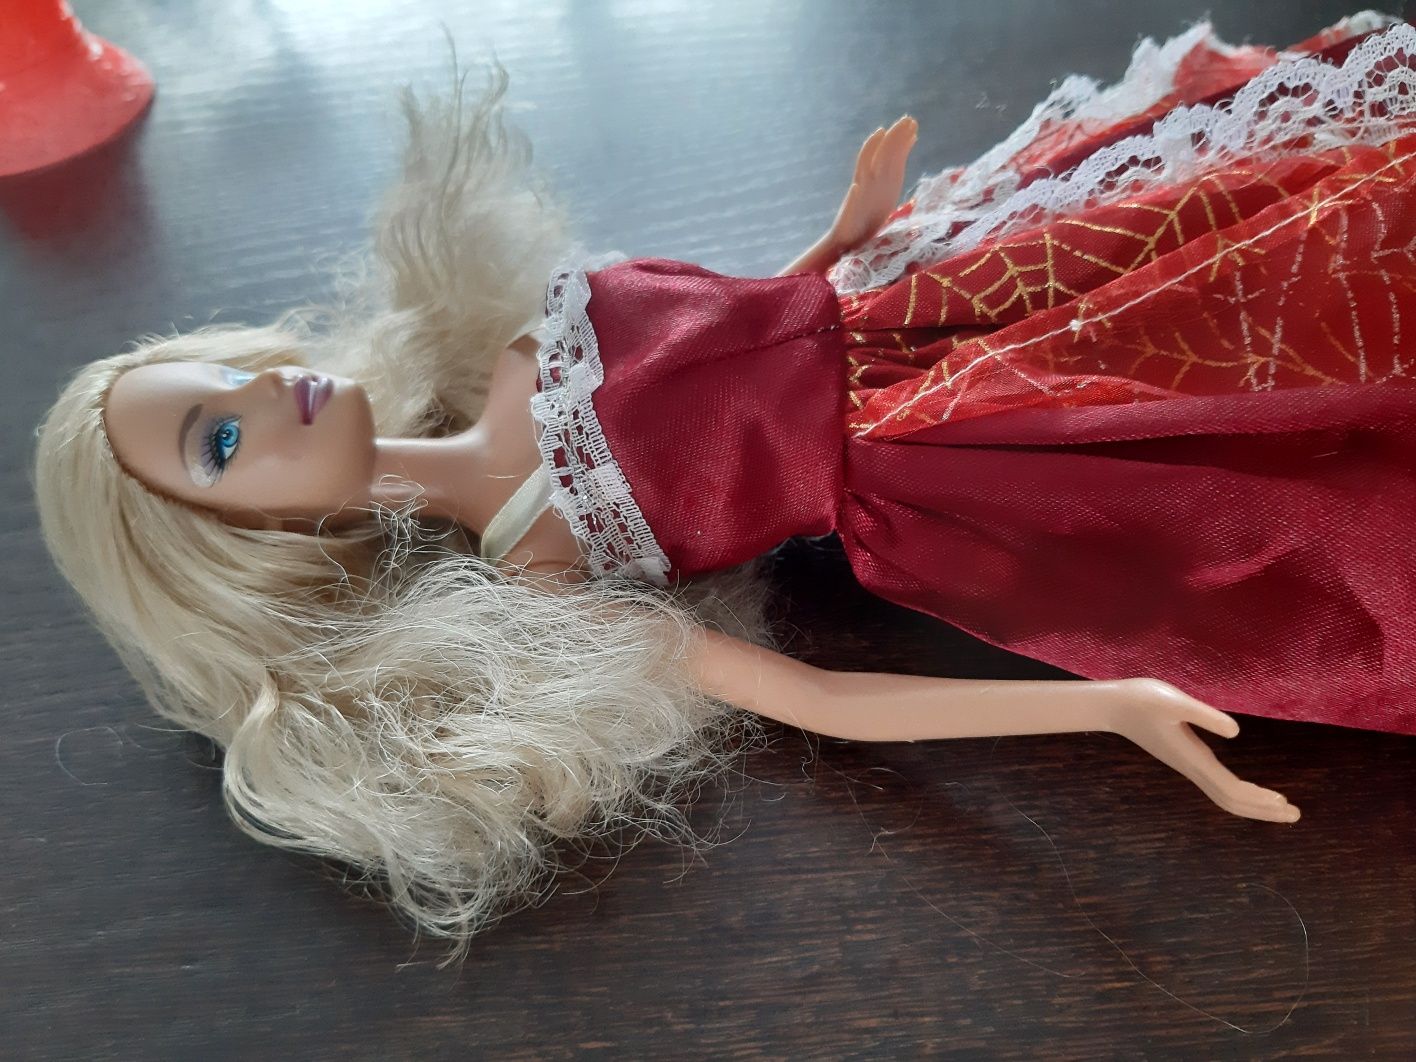 Lalka barbie mattel